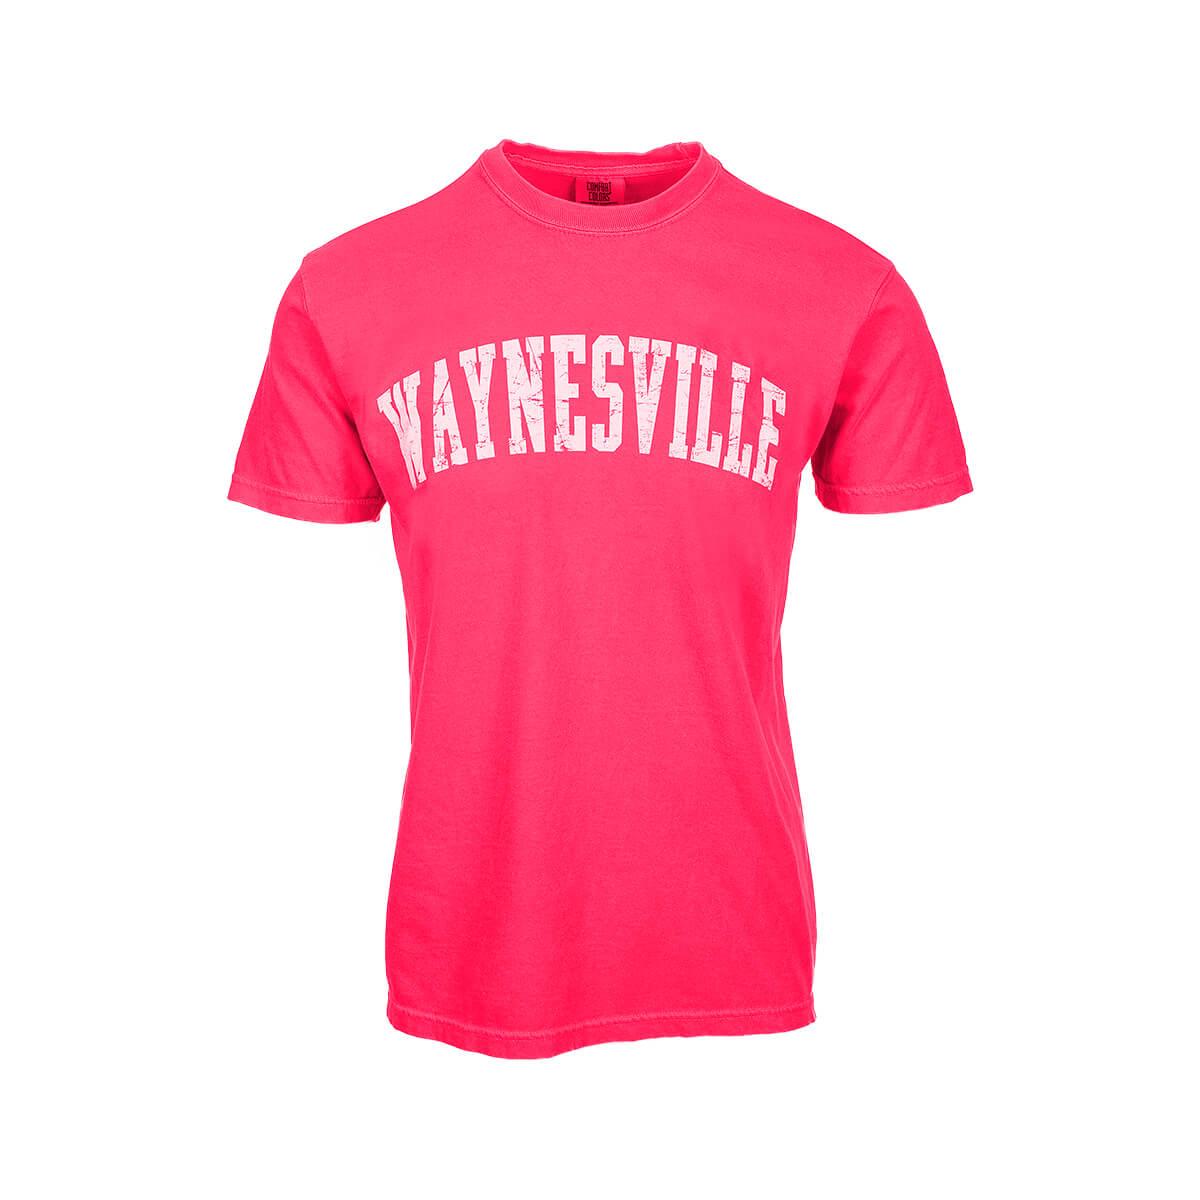  Mast General Store Waynesville Short Sleeve T- Shirt